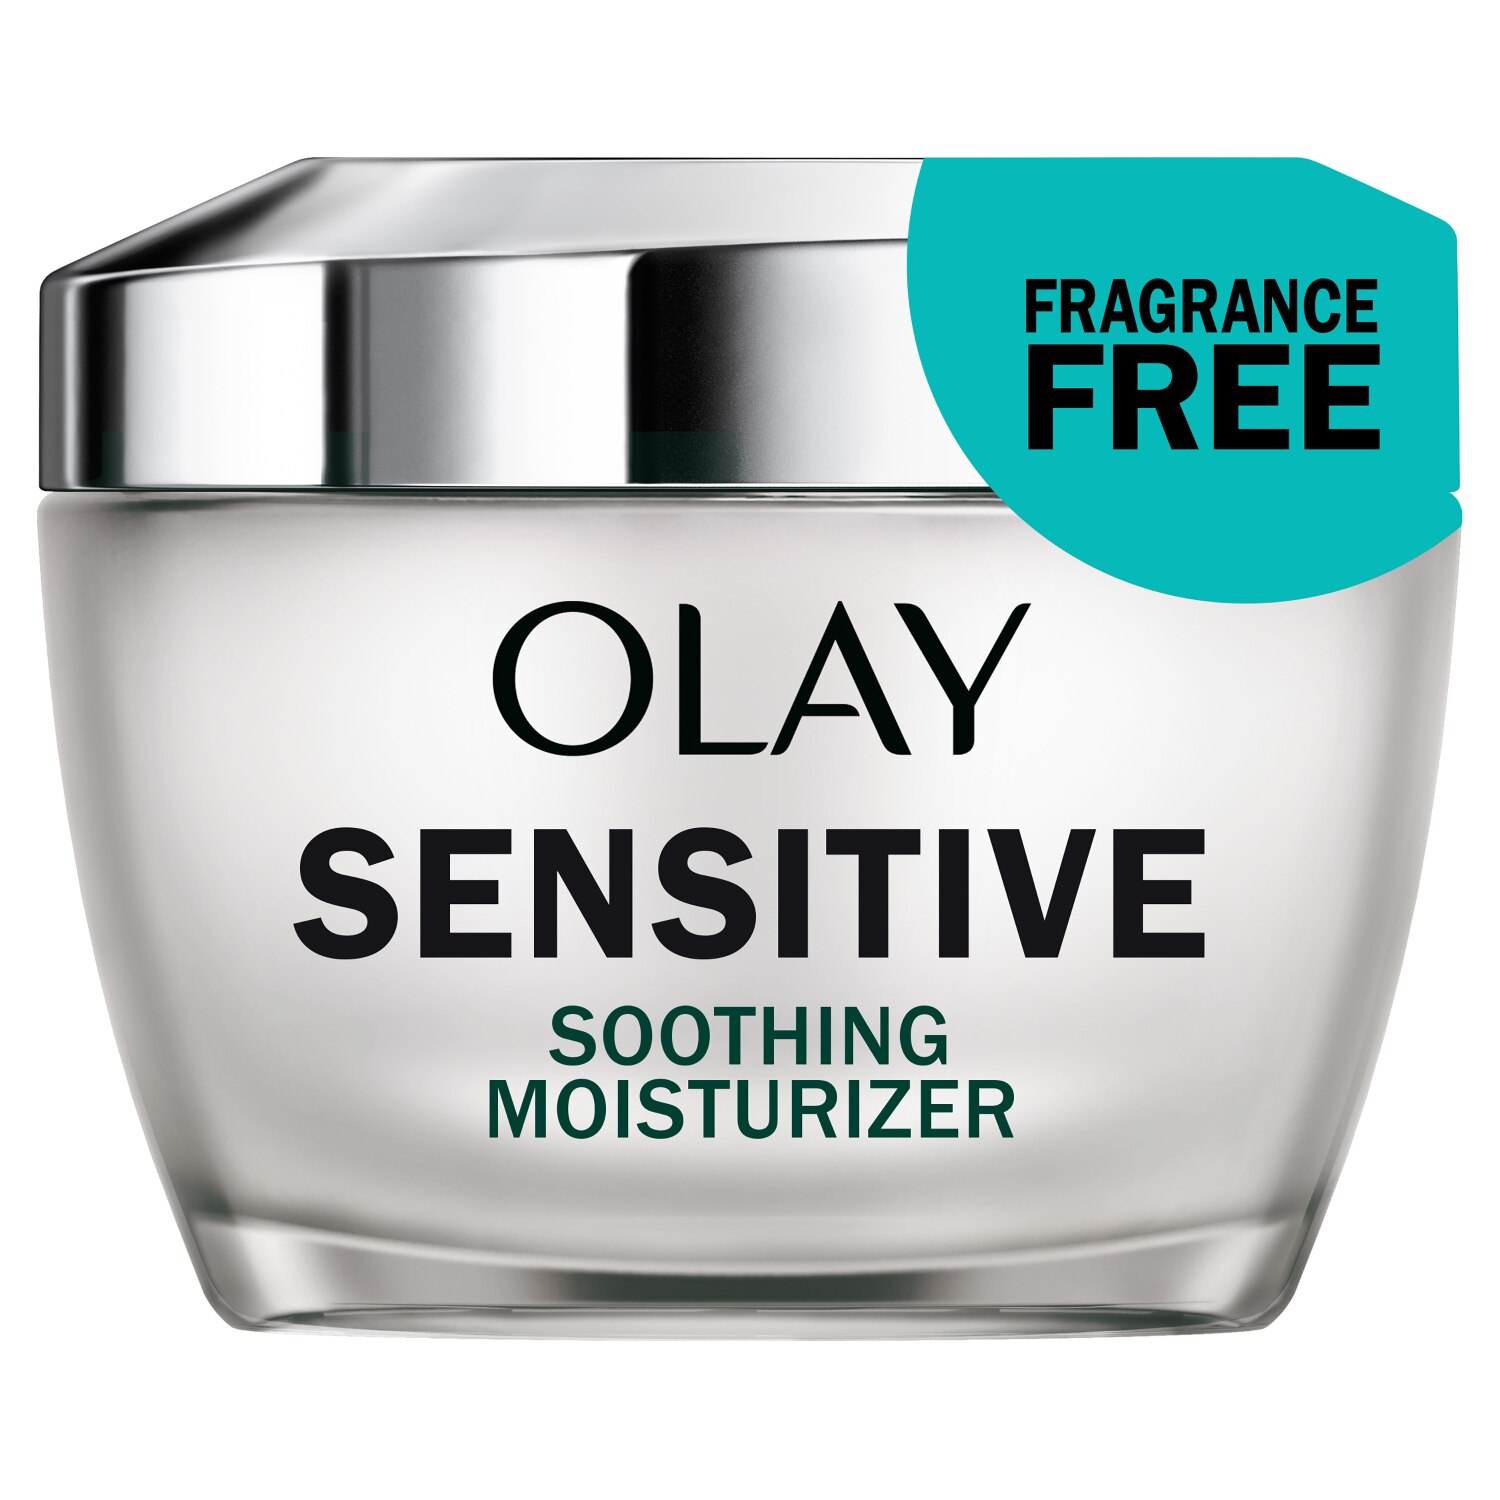 Olay Sensitive Face Moisturizer, Fragrance-Free, 1.7 fl oz